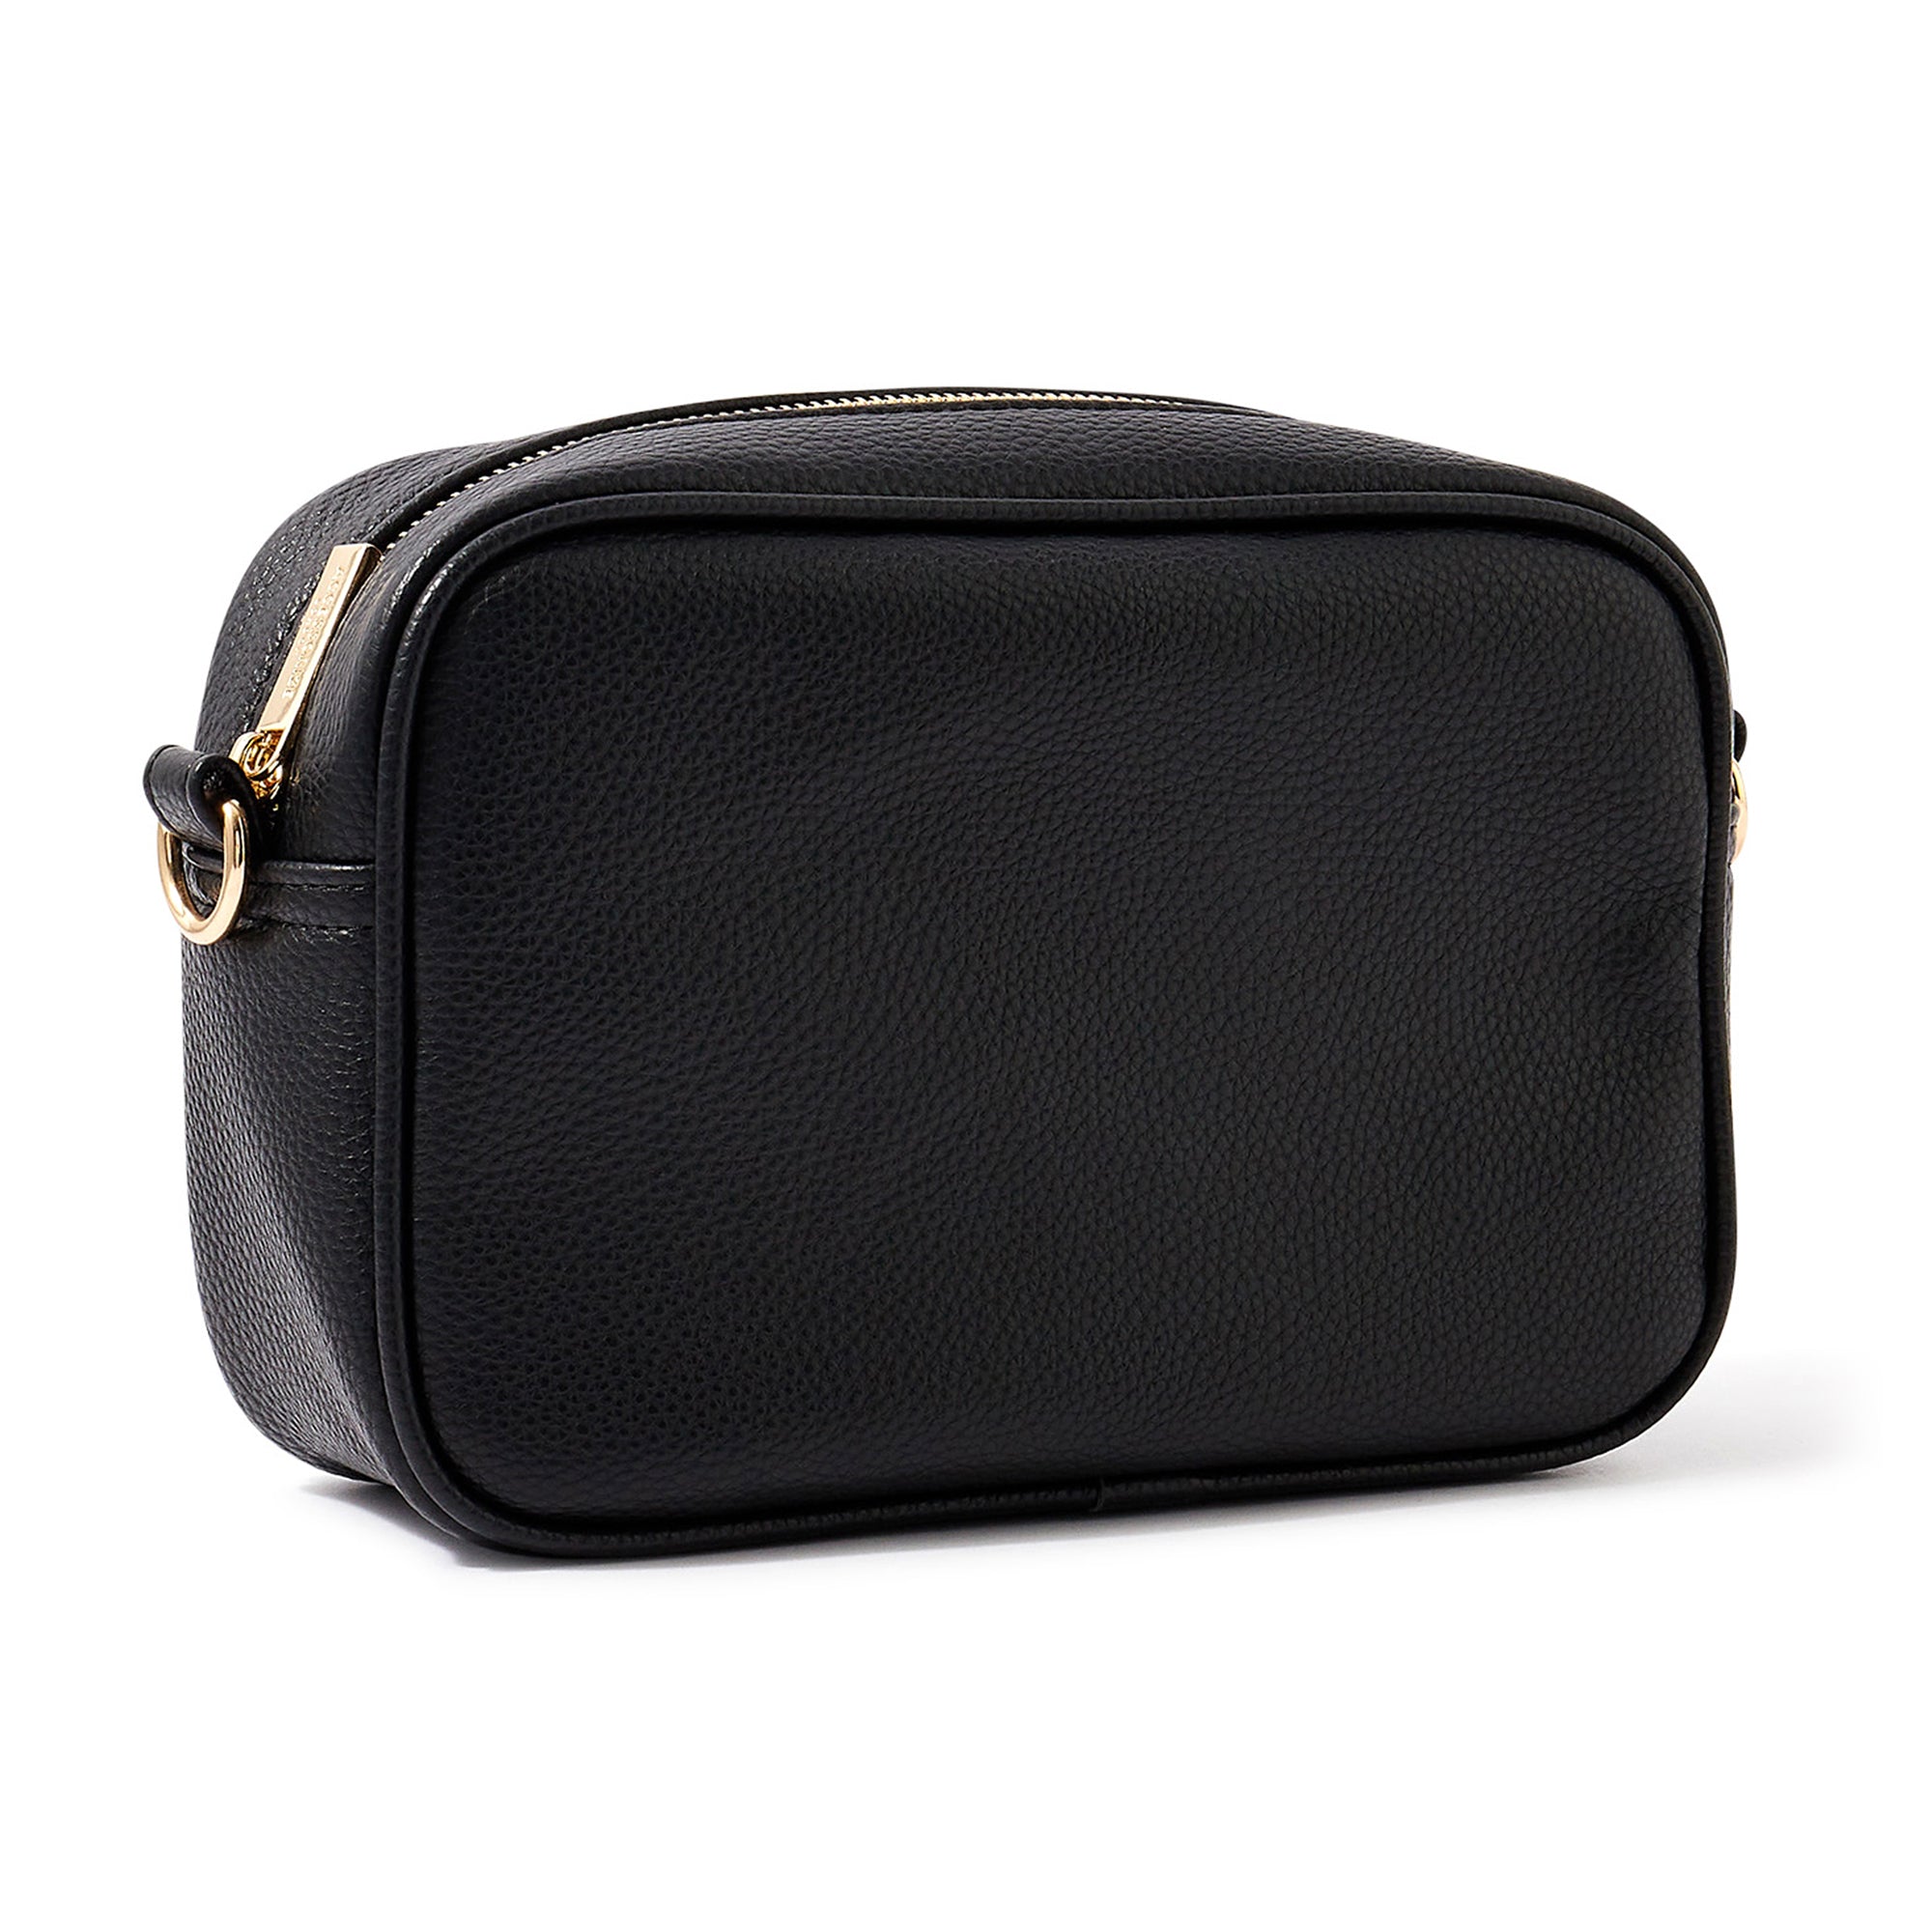 Accessorize London Women's Faux Leather Black Webbing Strap Camera Sling Bag